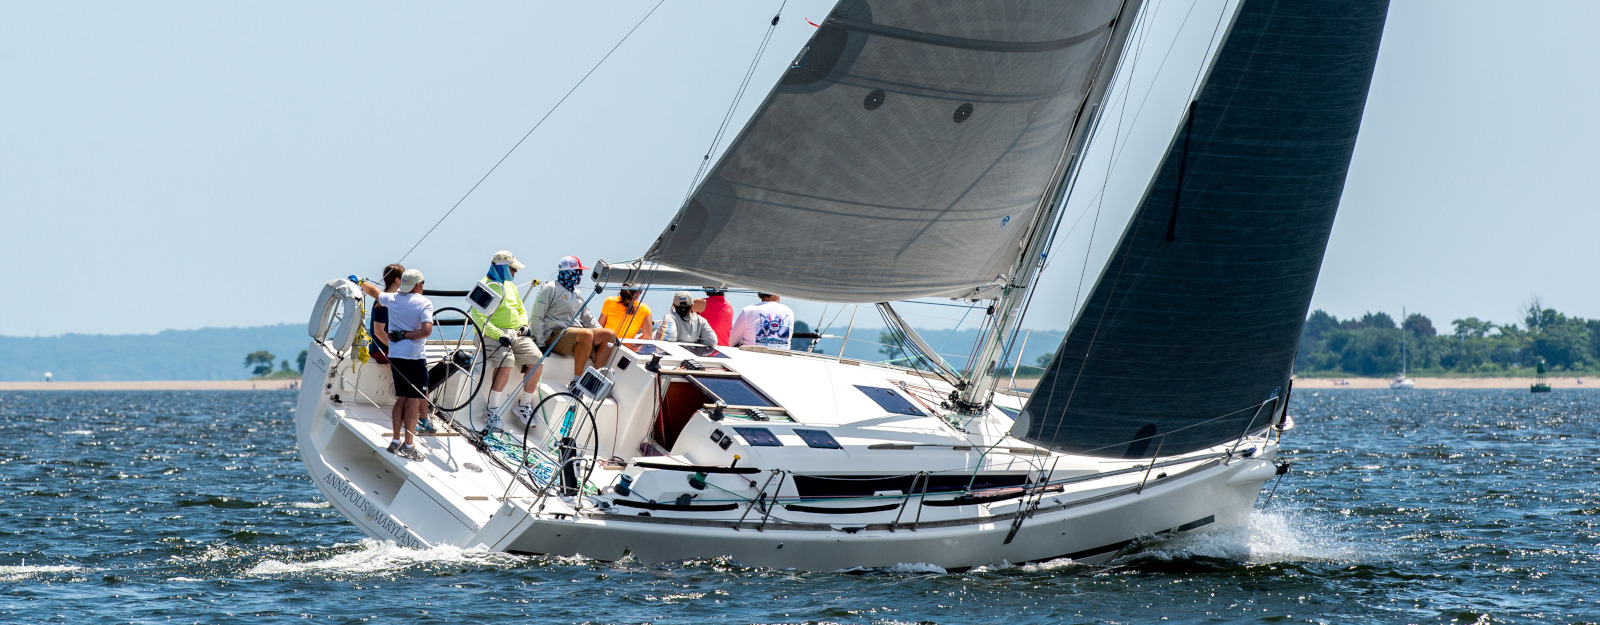 rhode island yacht club membership cost